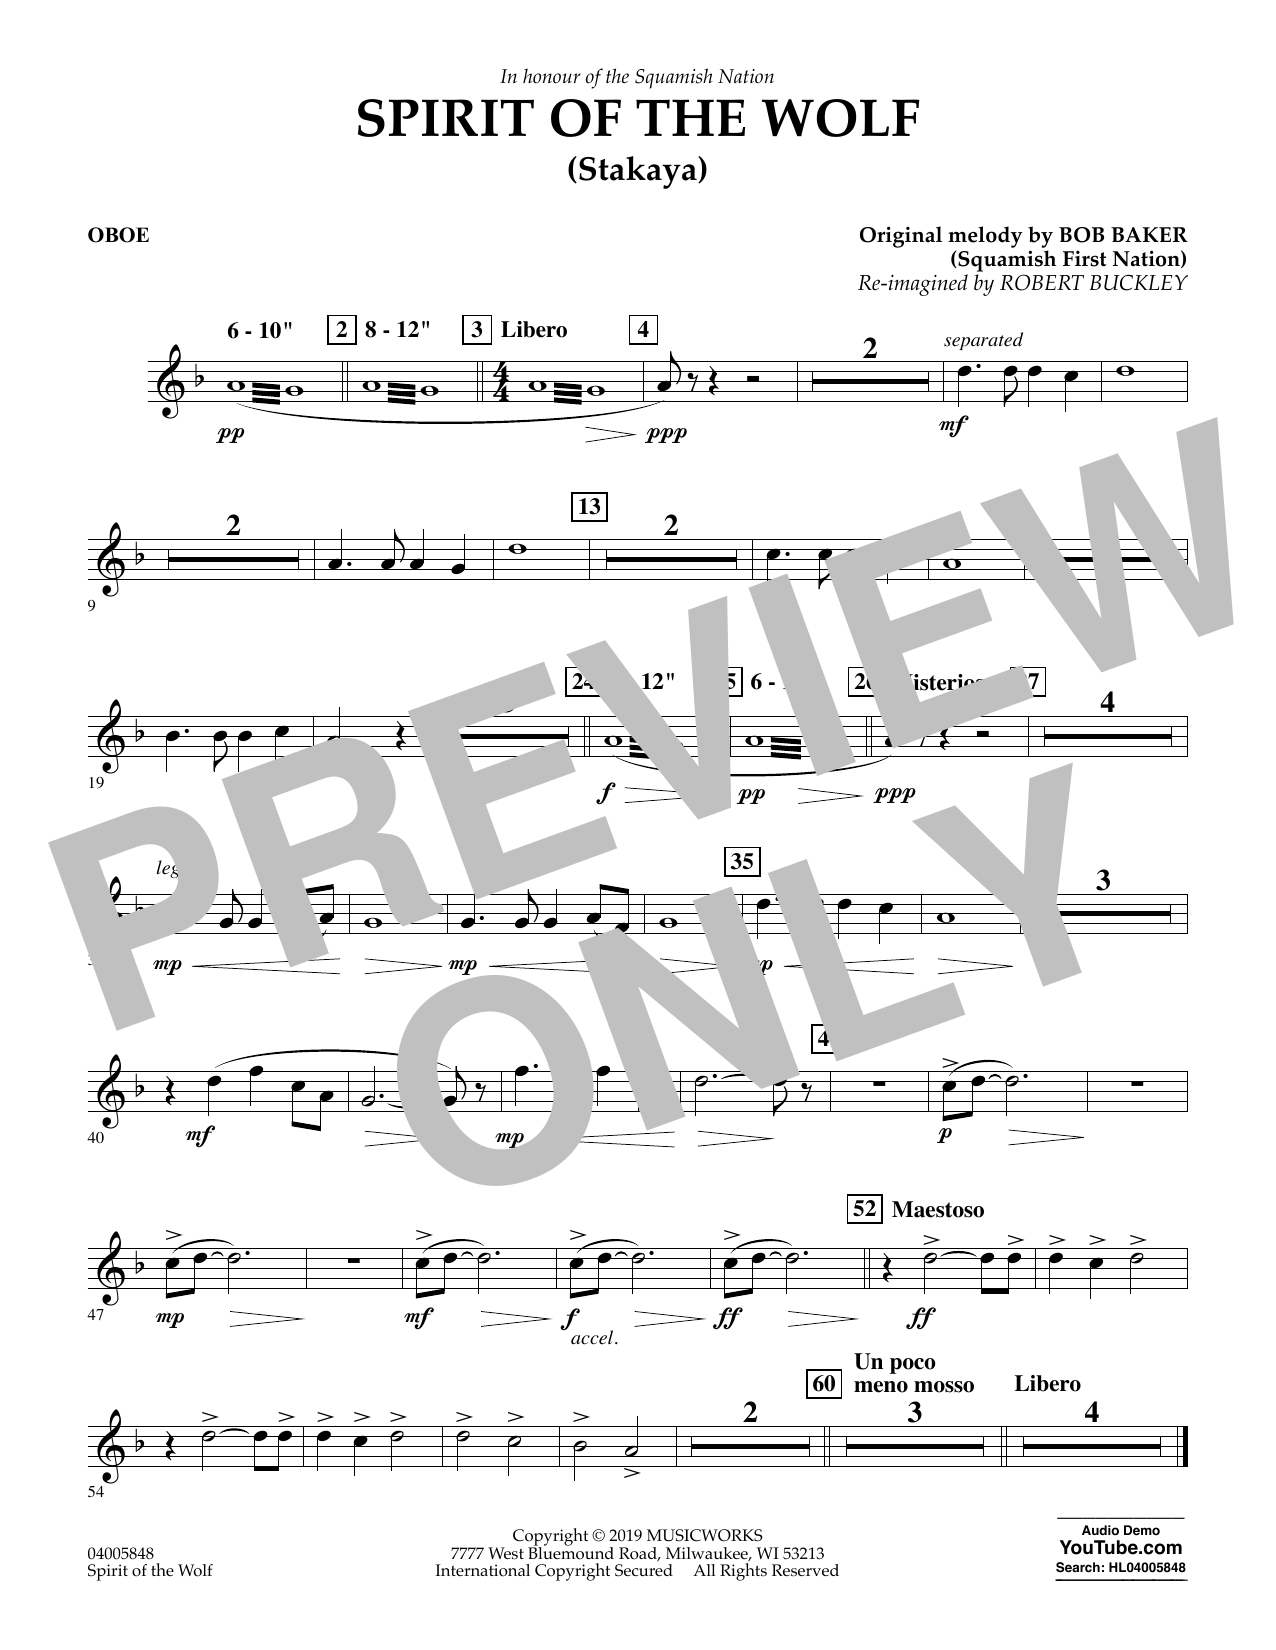 Download Robert Buckley Spirit of the Wolf (Stakaya) - Oboe Sheet Music